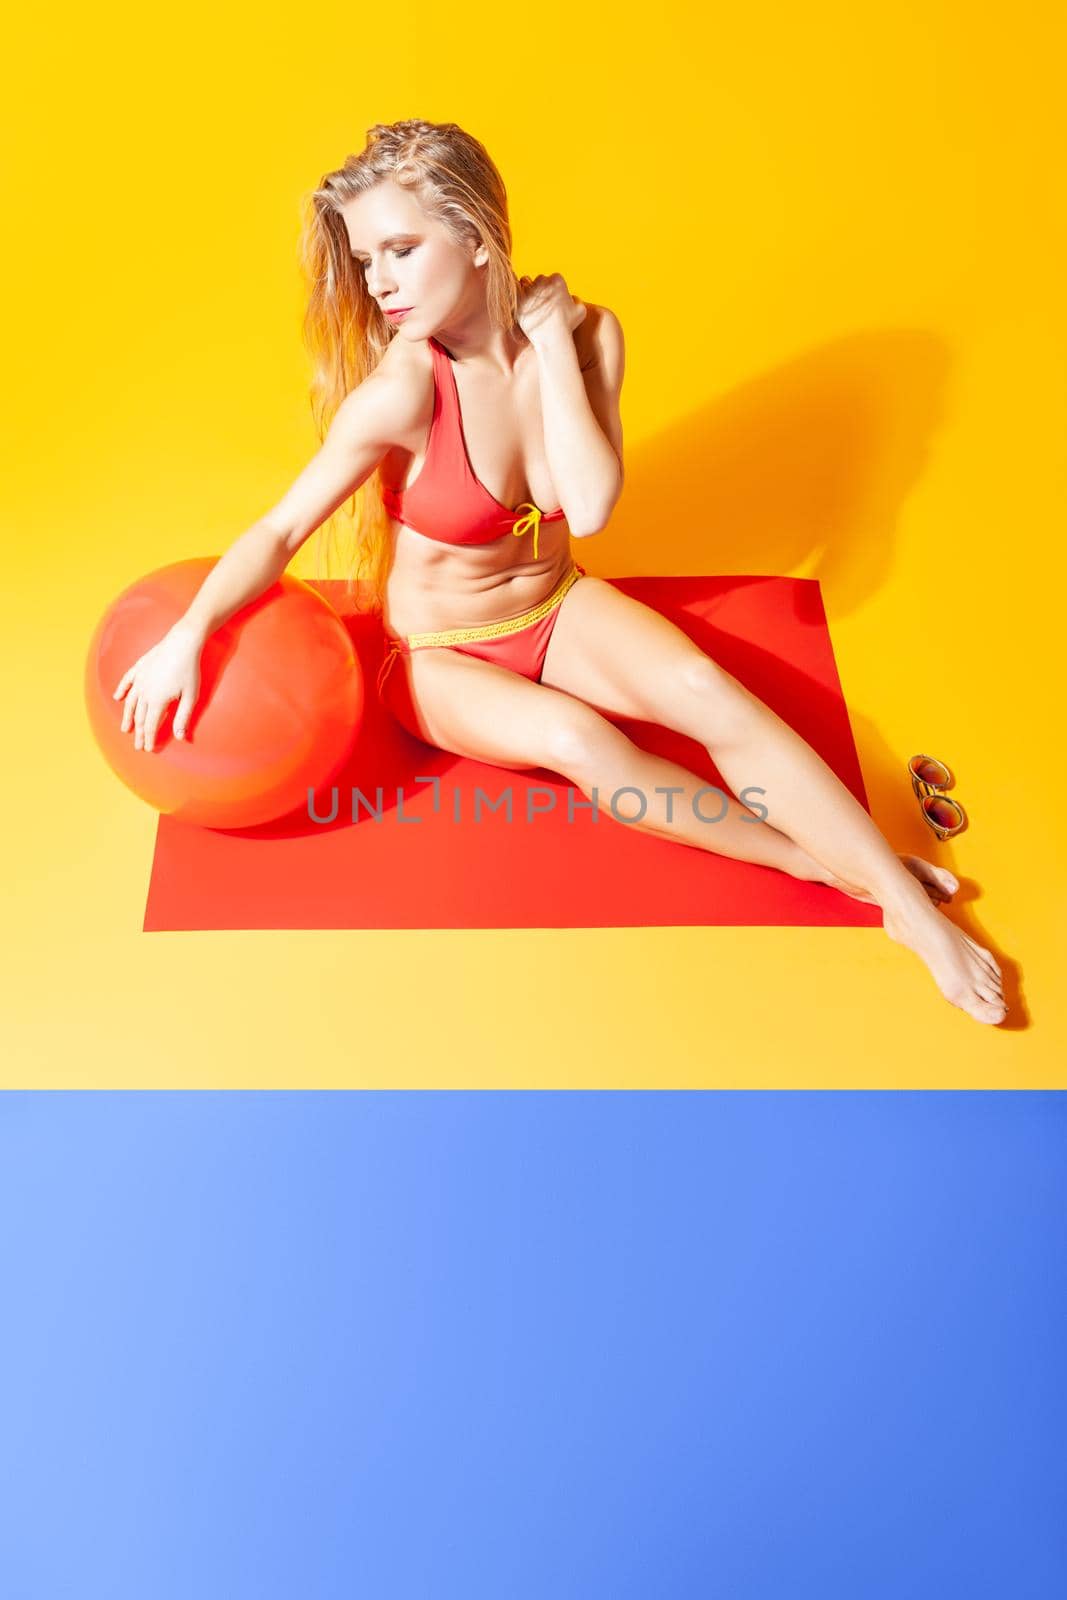 Woman in bikini with inflatable ball in studio by Julenochek